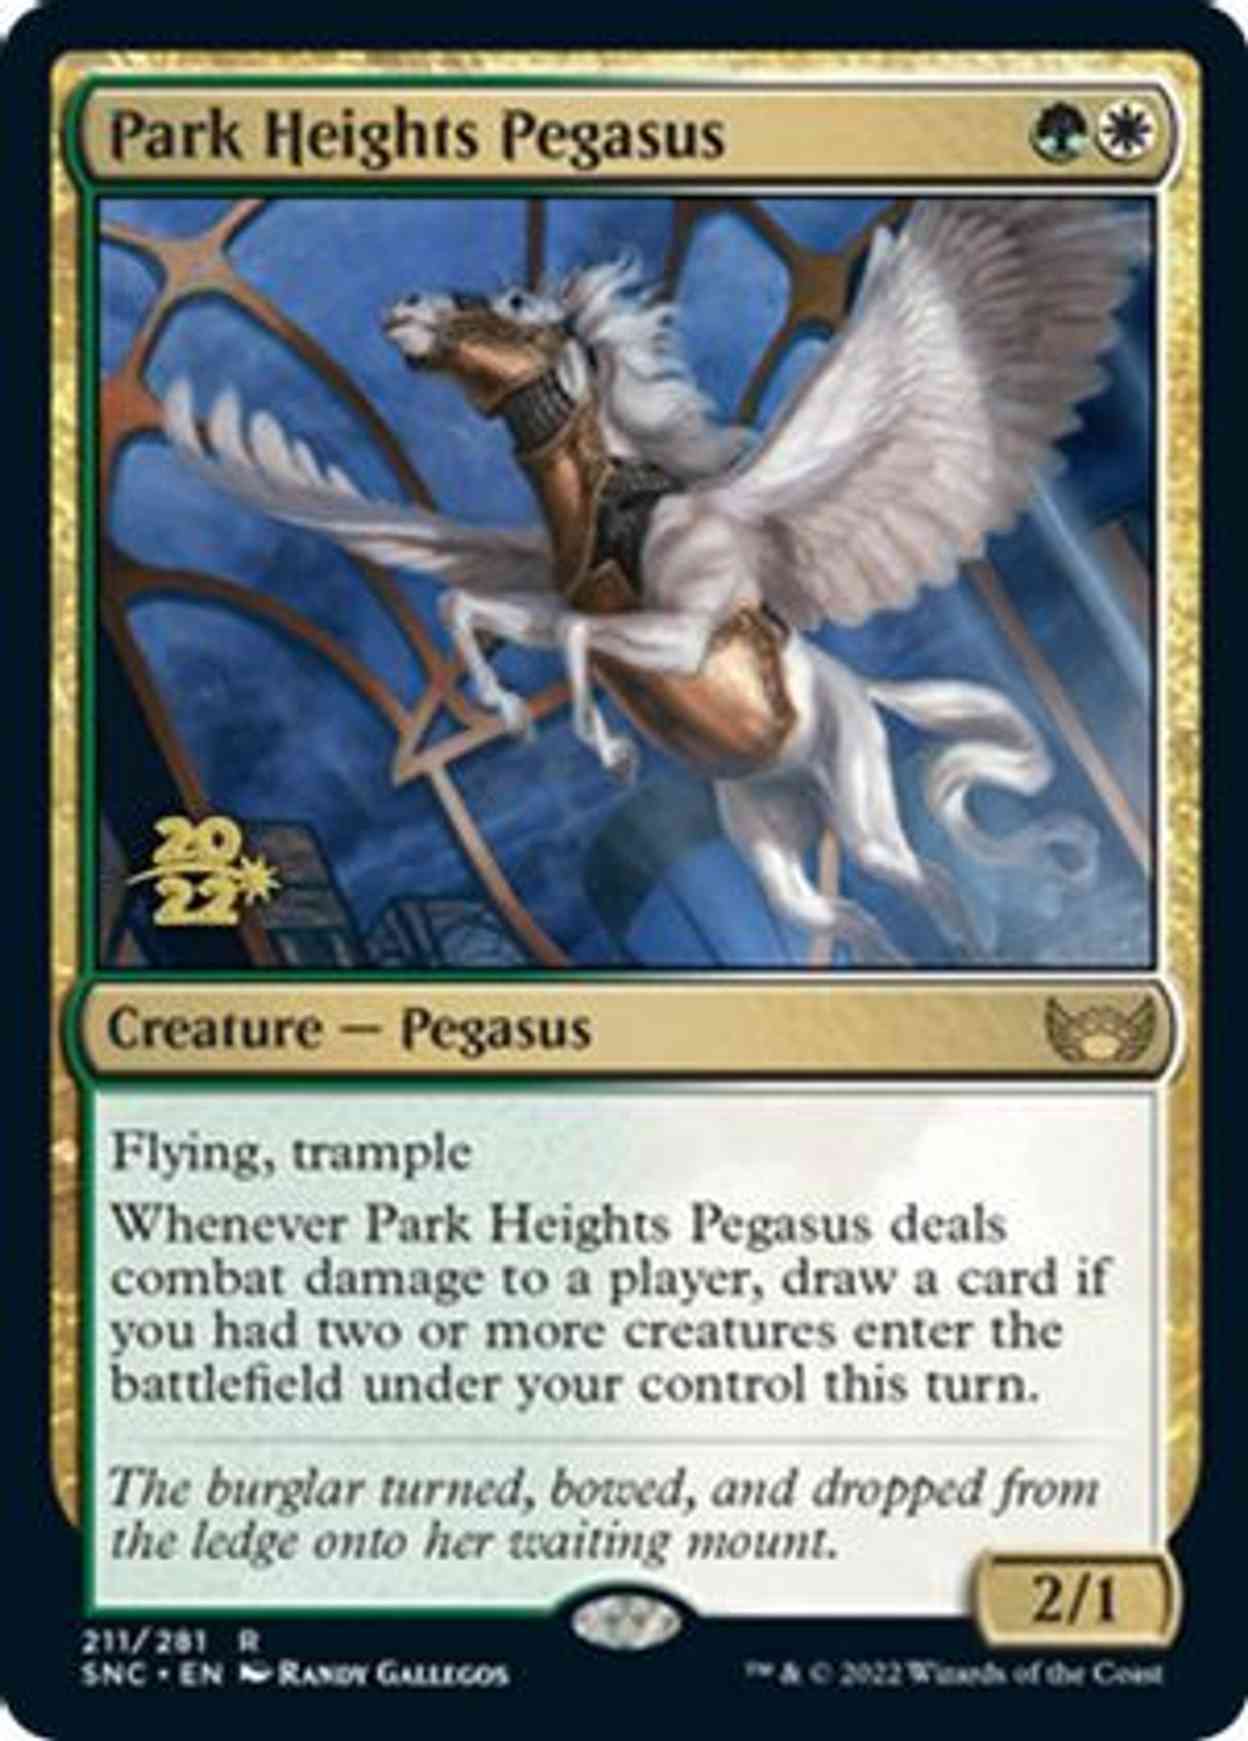 Park Heights Pegasus magic card front